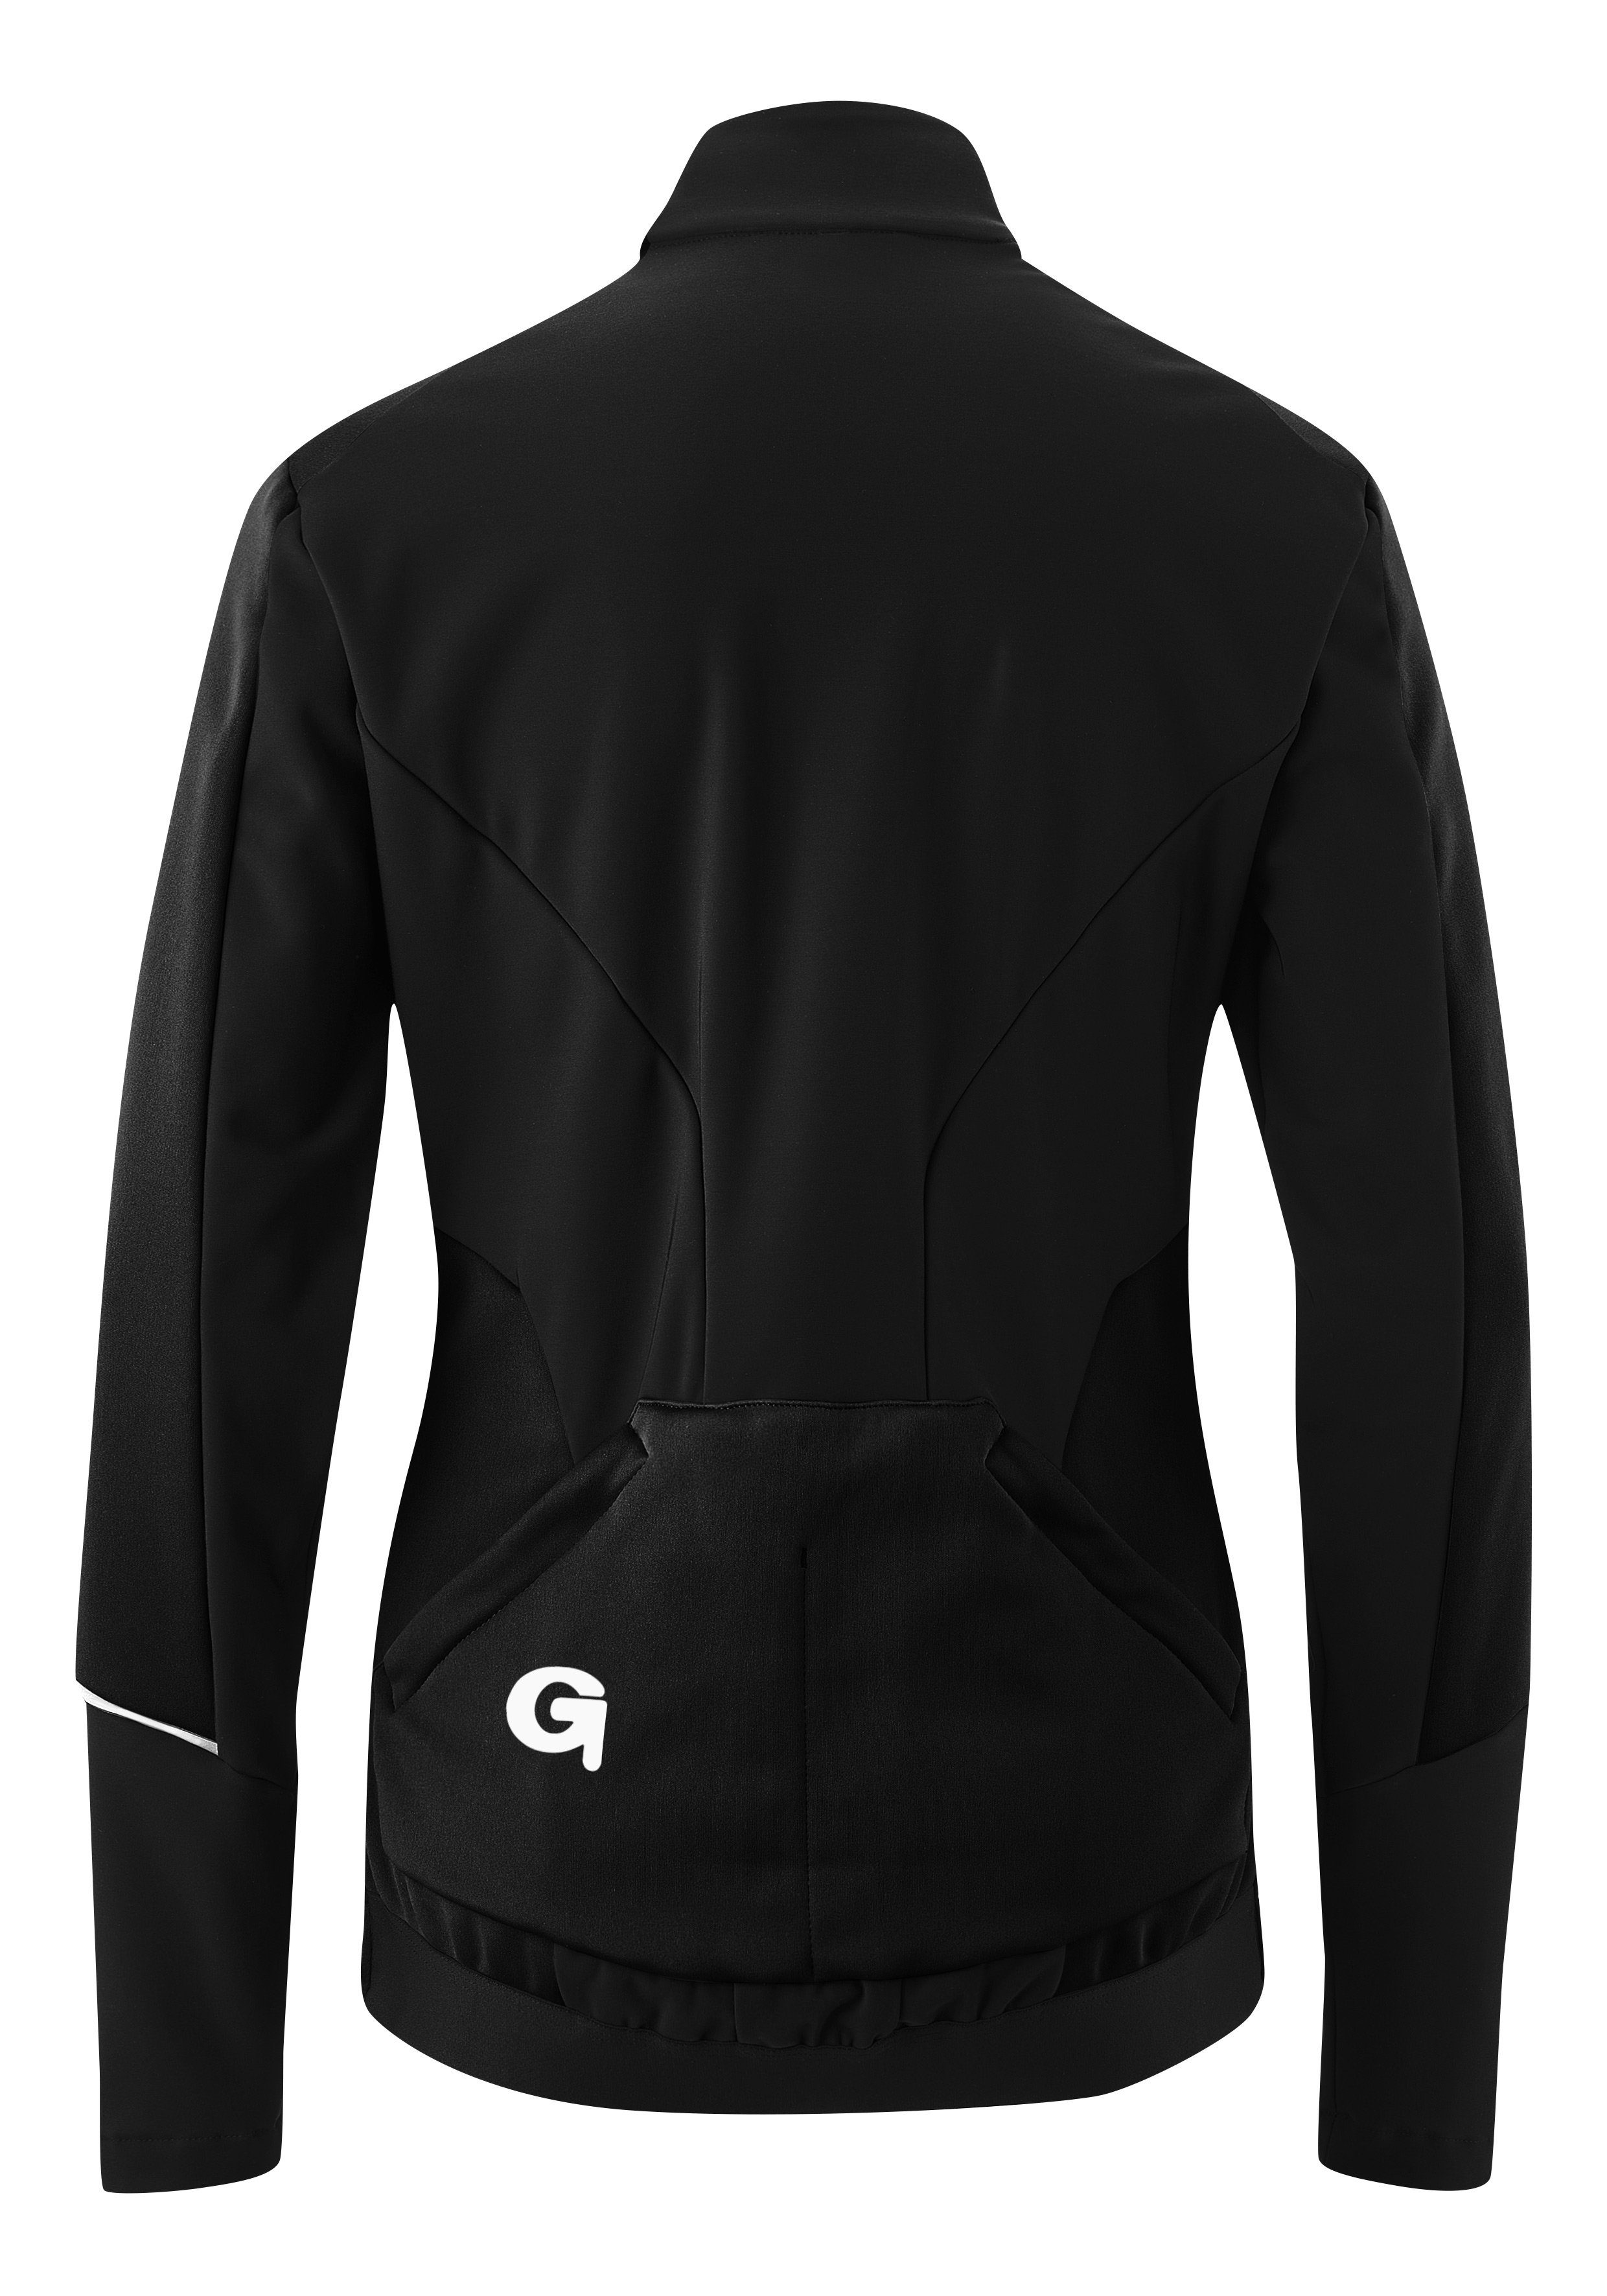 Gonso Fahrradjacke FURIANI Windjacke wasserabweisend und Damen atmungsaktiv Softshell-Jacke, schwarz